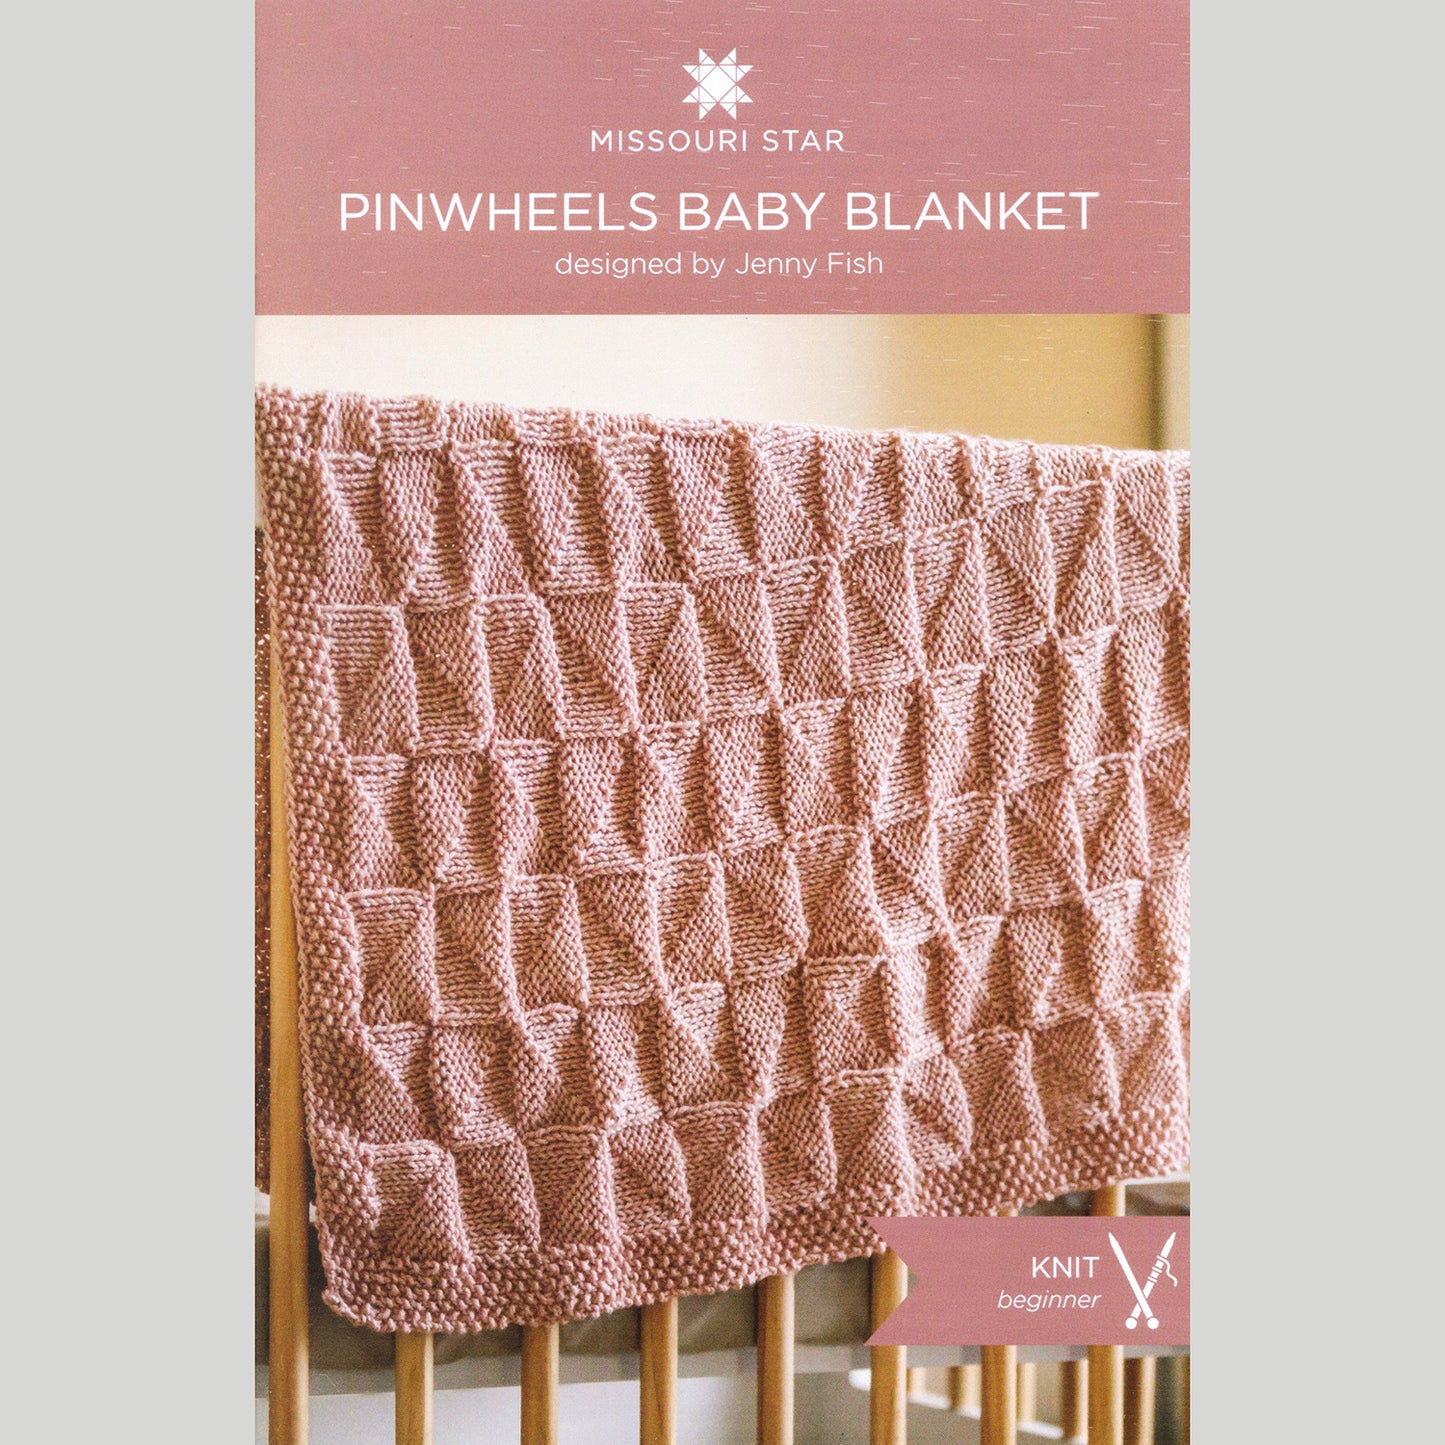 Pinwheels for Baby Blanket Knit Kit - Cerise Alternative View #2